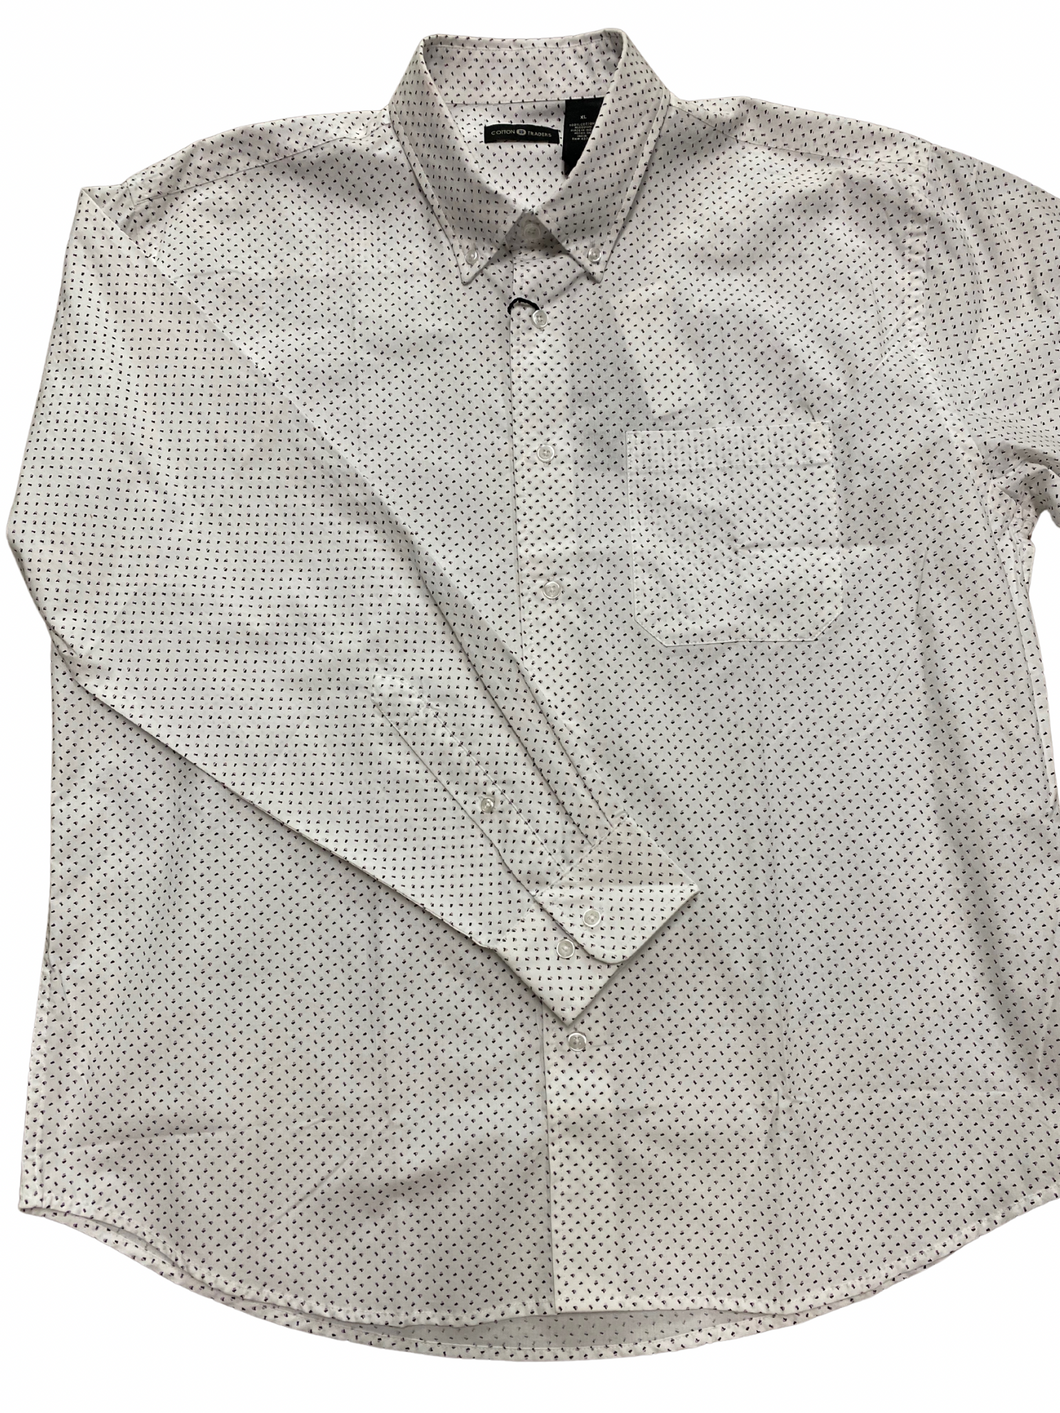 Cotton Traders White Dot Detail Woven Long Sleeve Sport Shirt